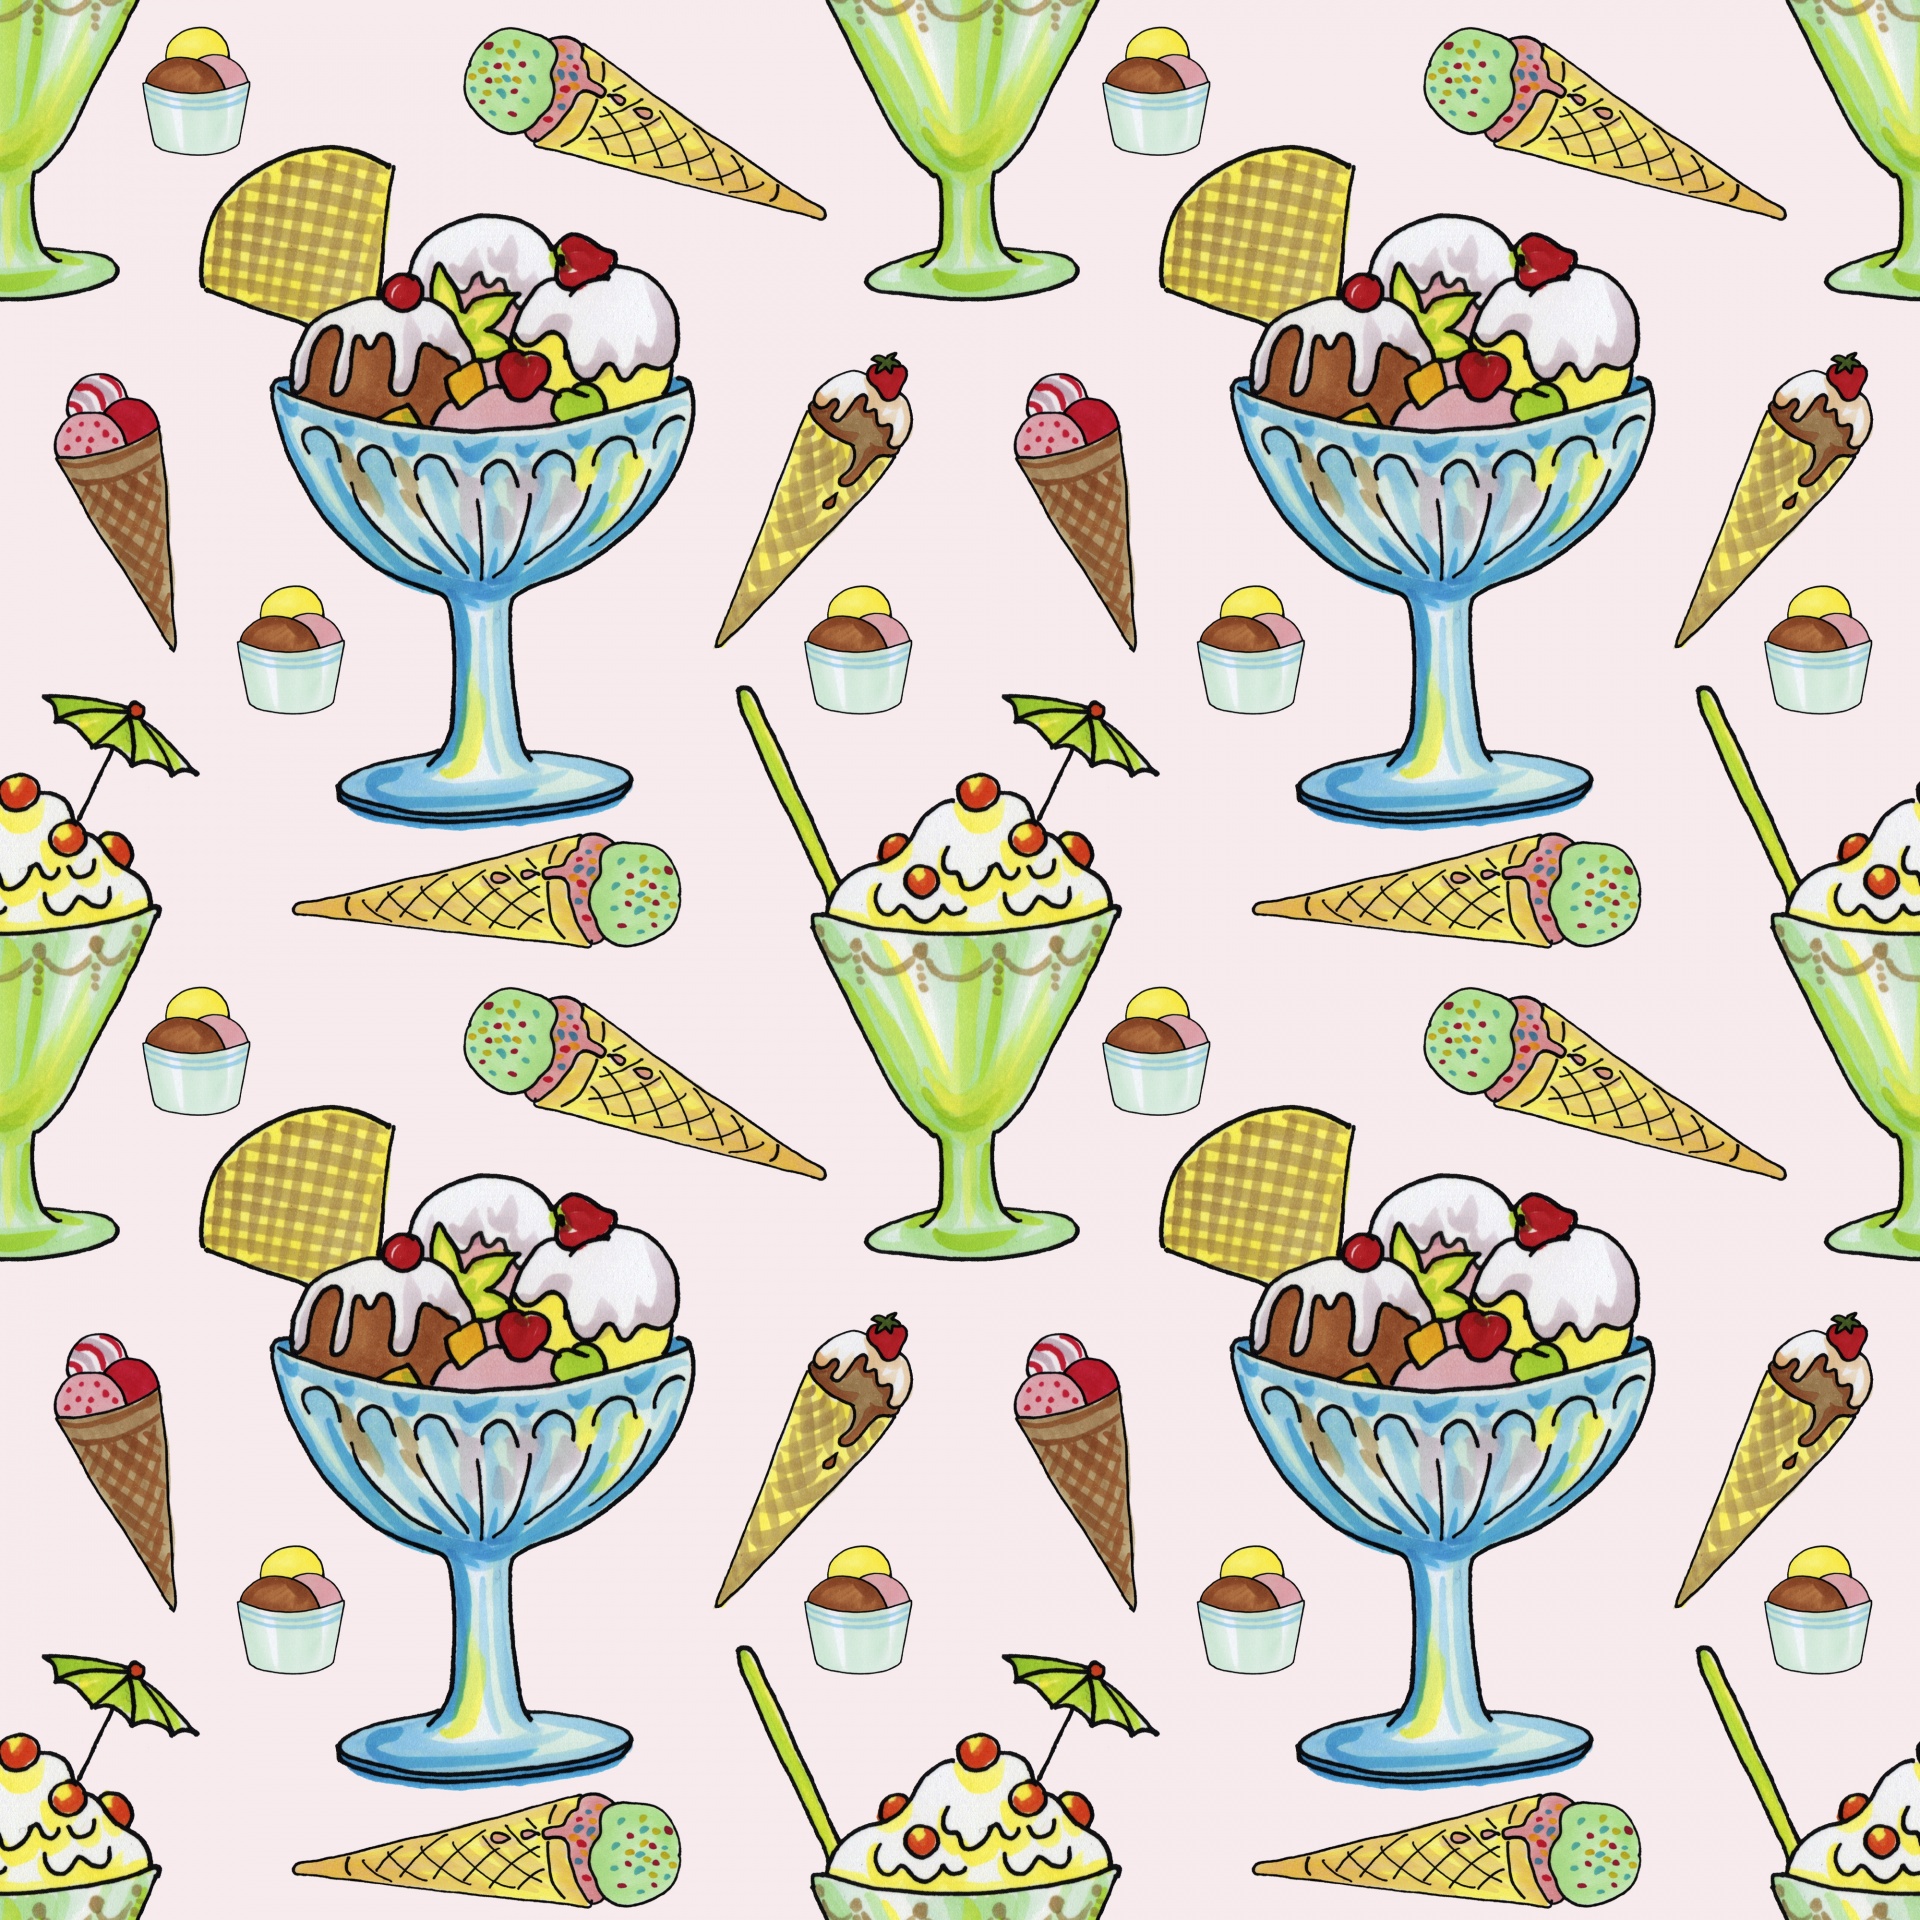 Ice Cream Background Pattern